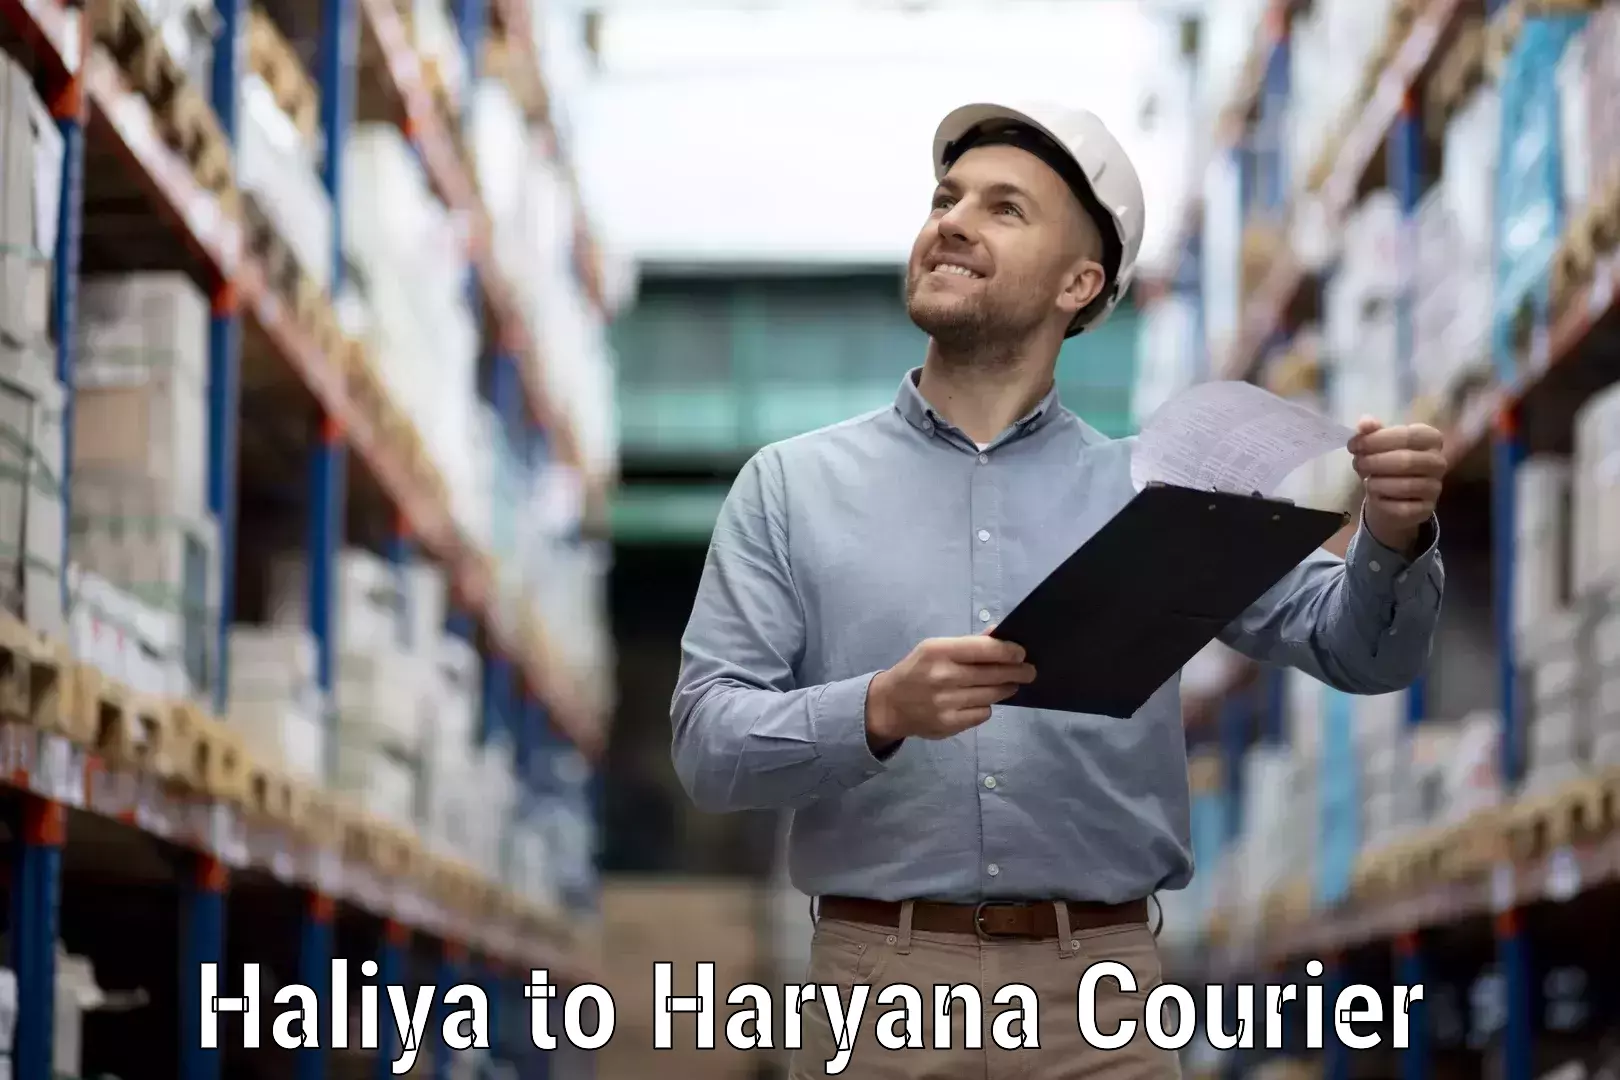 Business shipping needs Haliya to Chirya